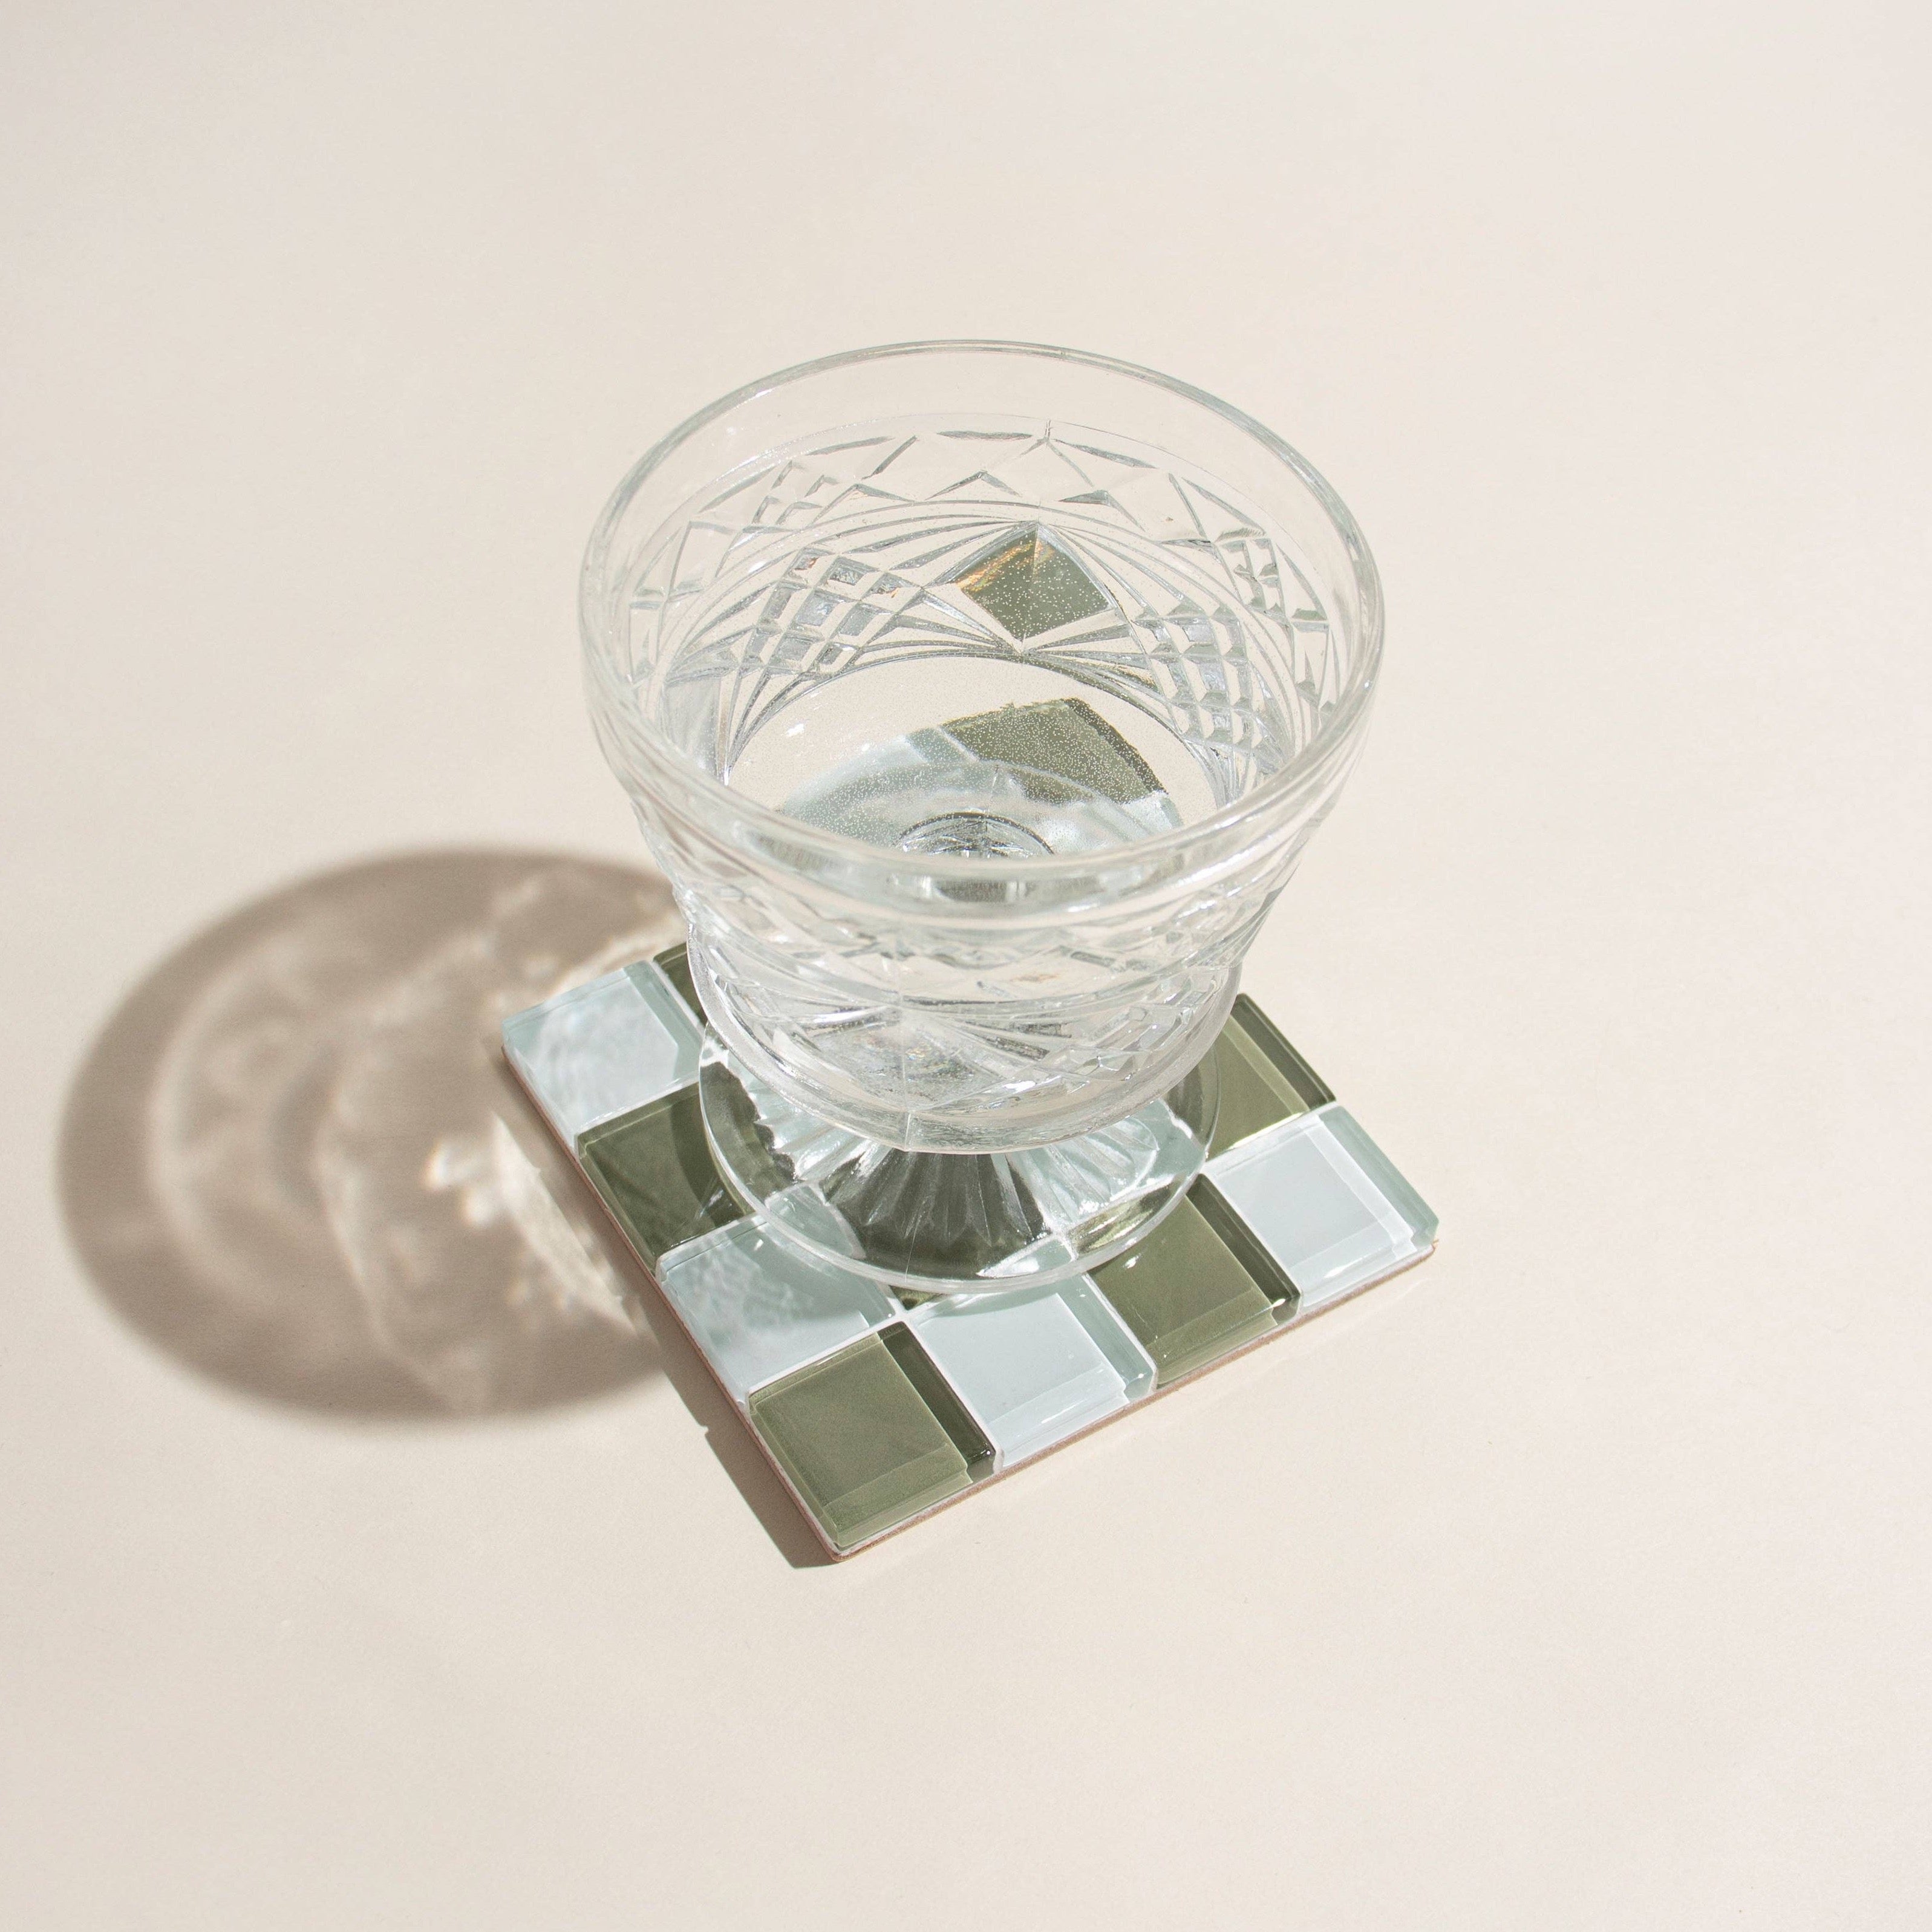 GLASS TILE COASTER - Matcha Milk Chocolate by Subtle Art Studios